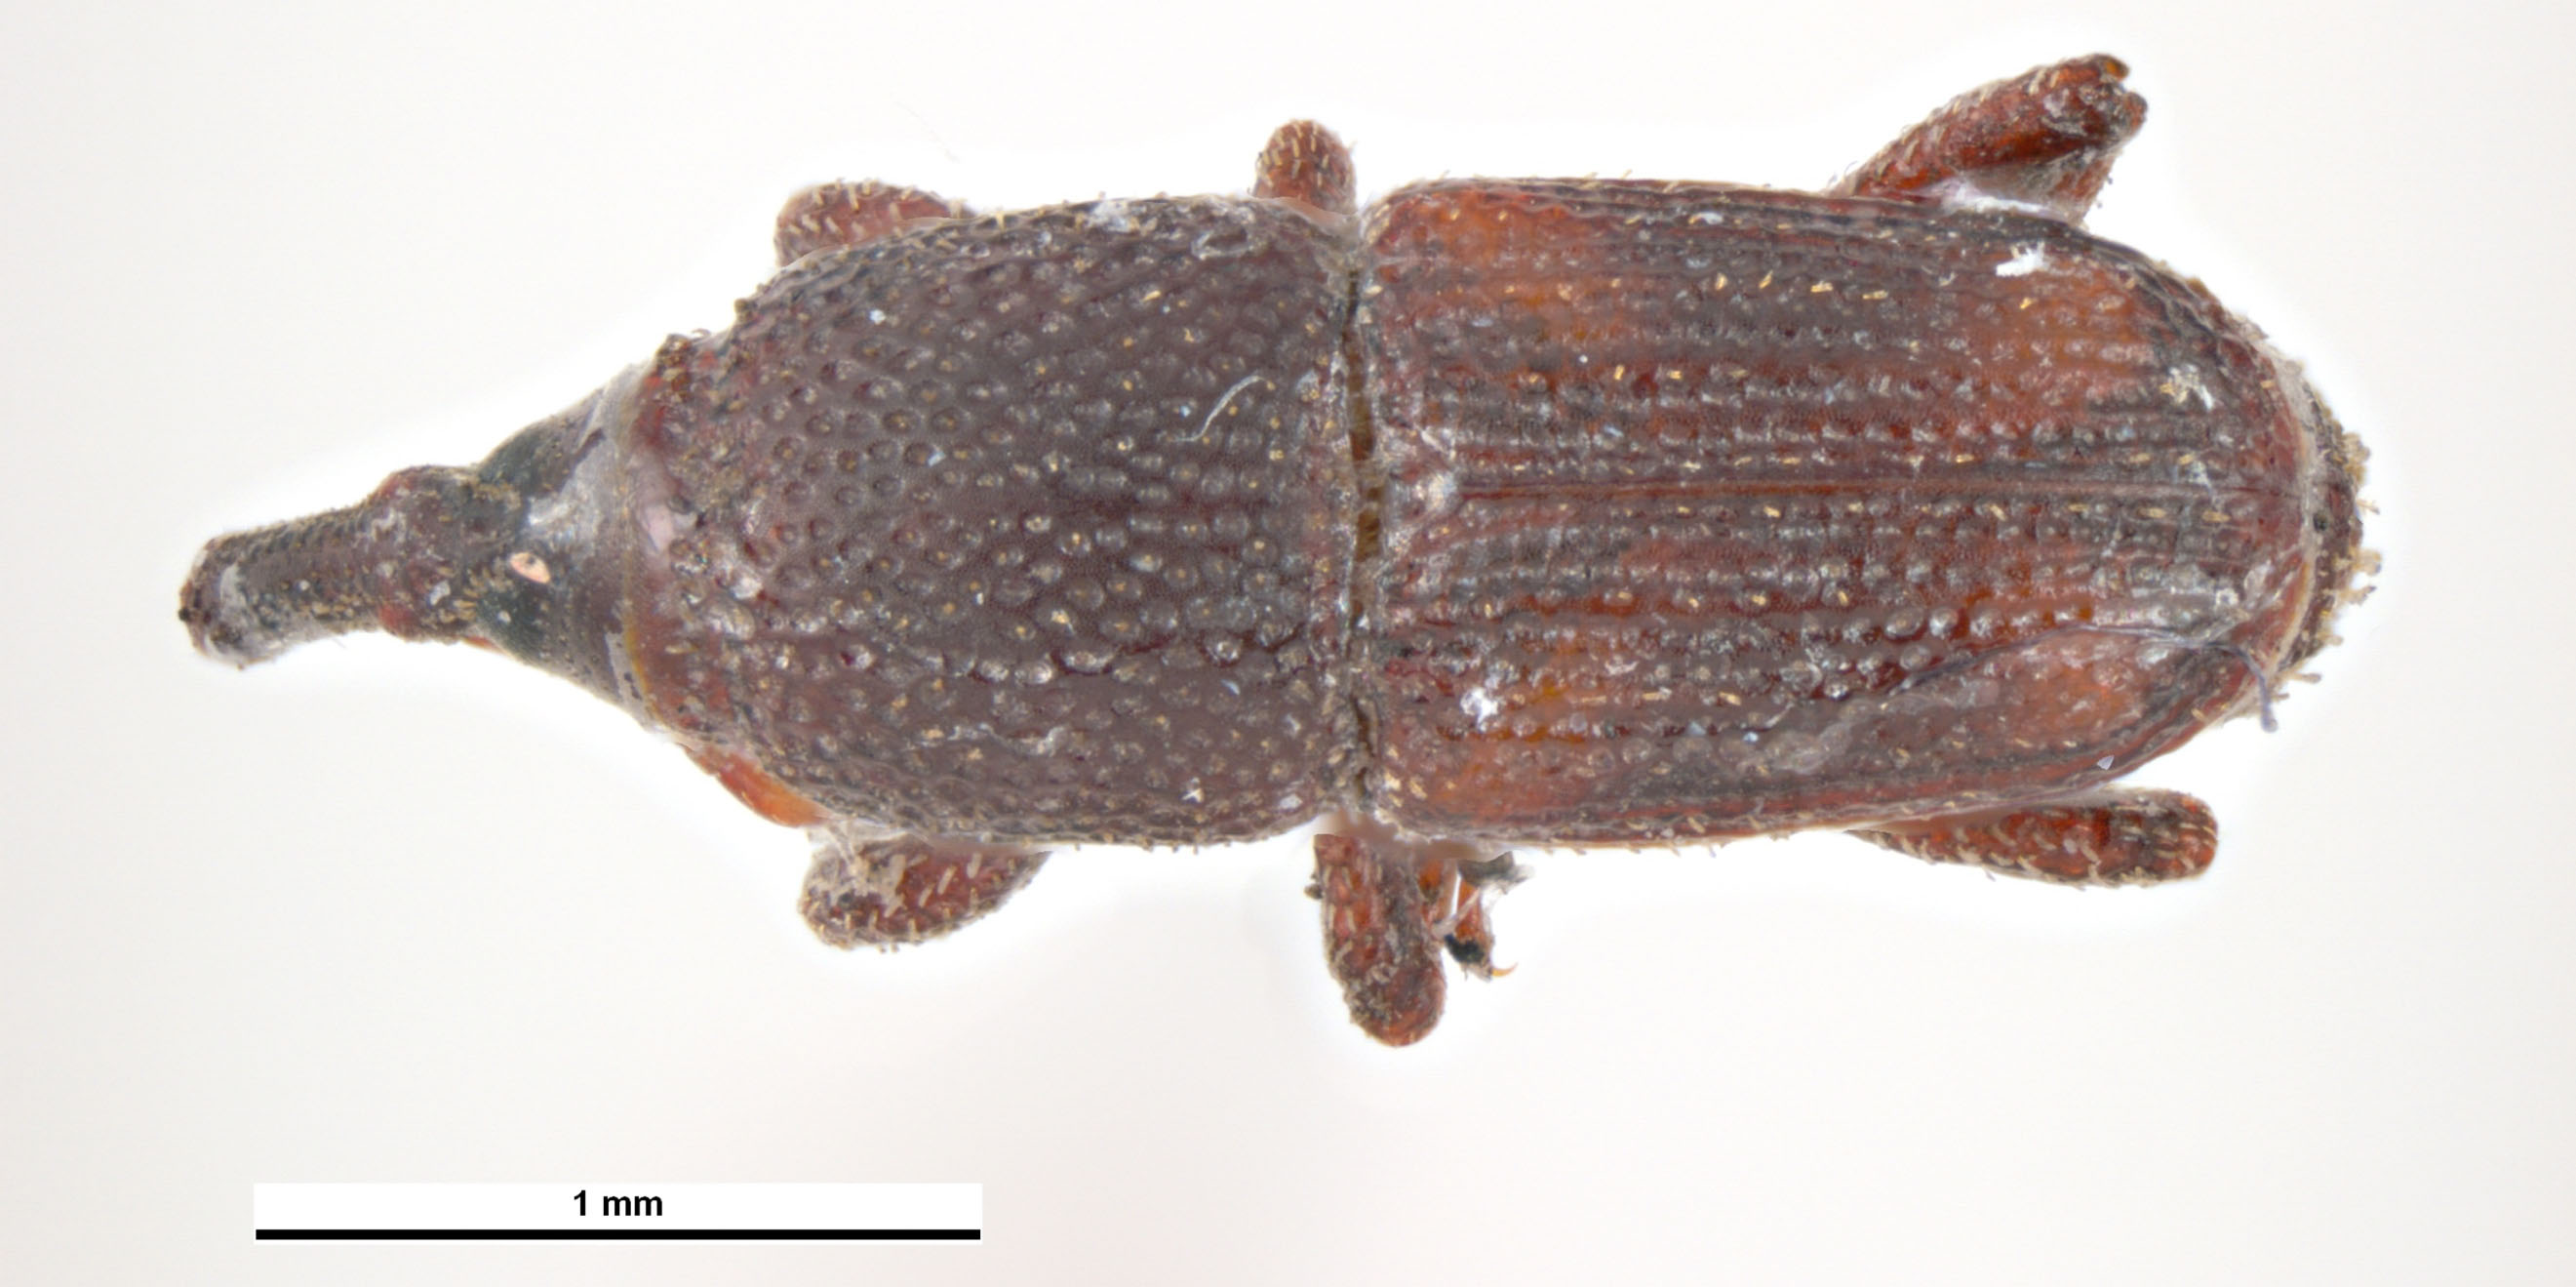 Elongate brown beetle with orange “X” pattern on elytra.